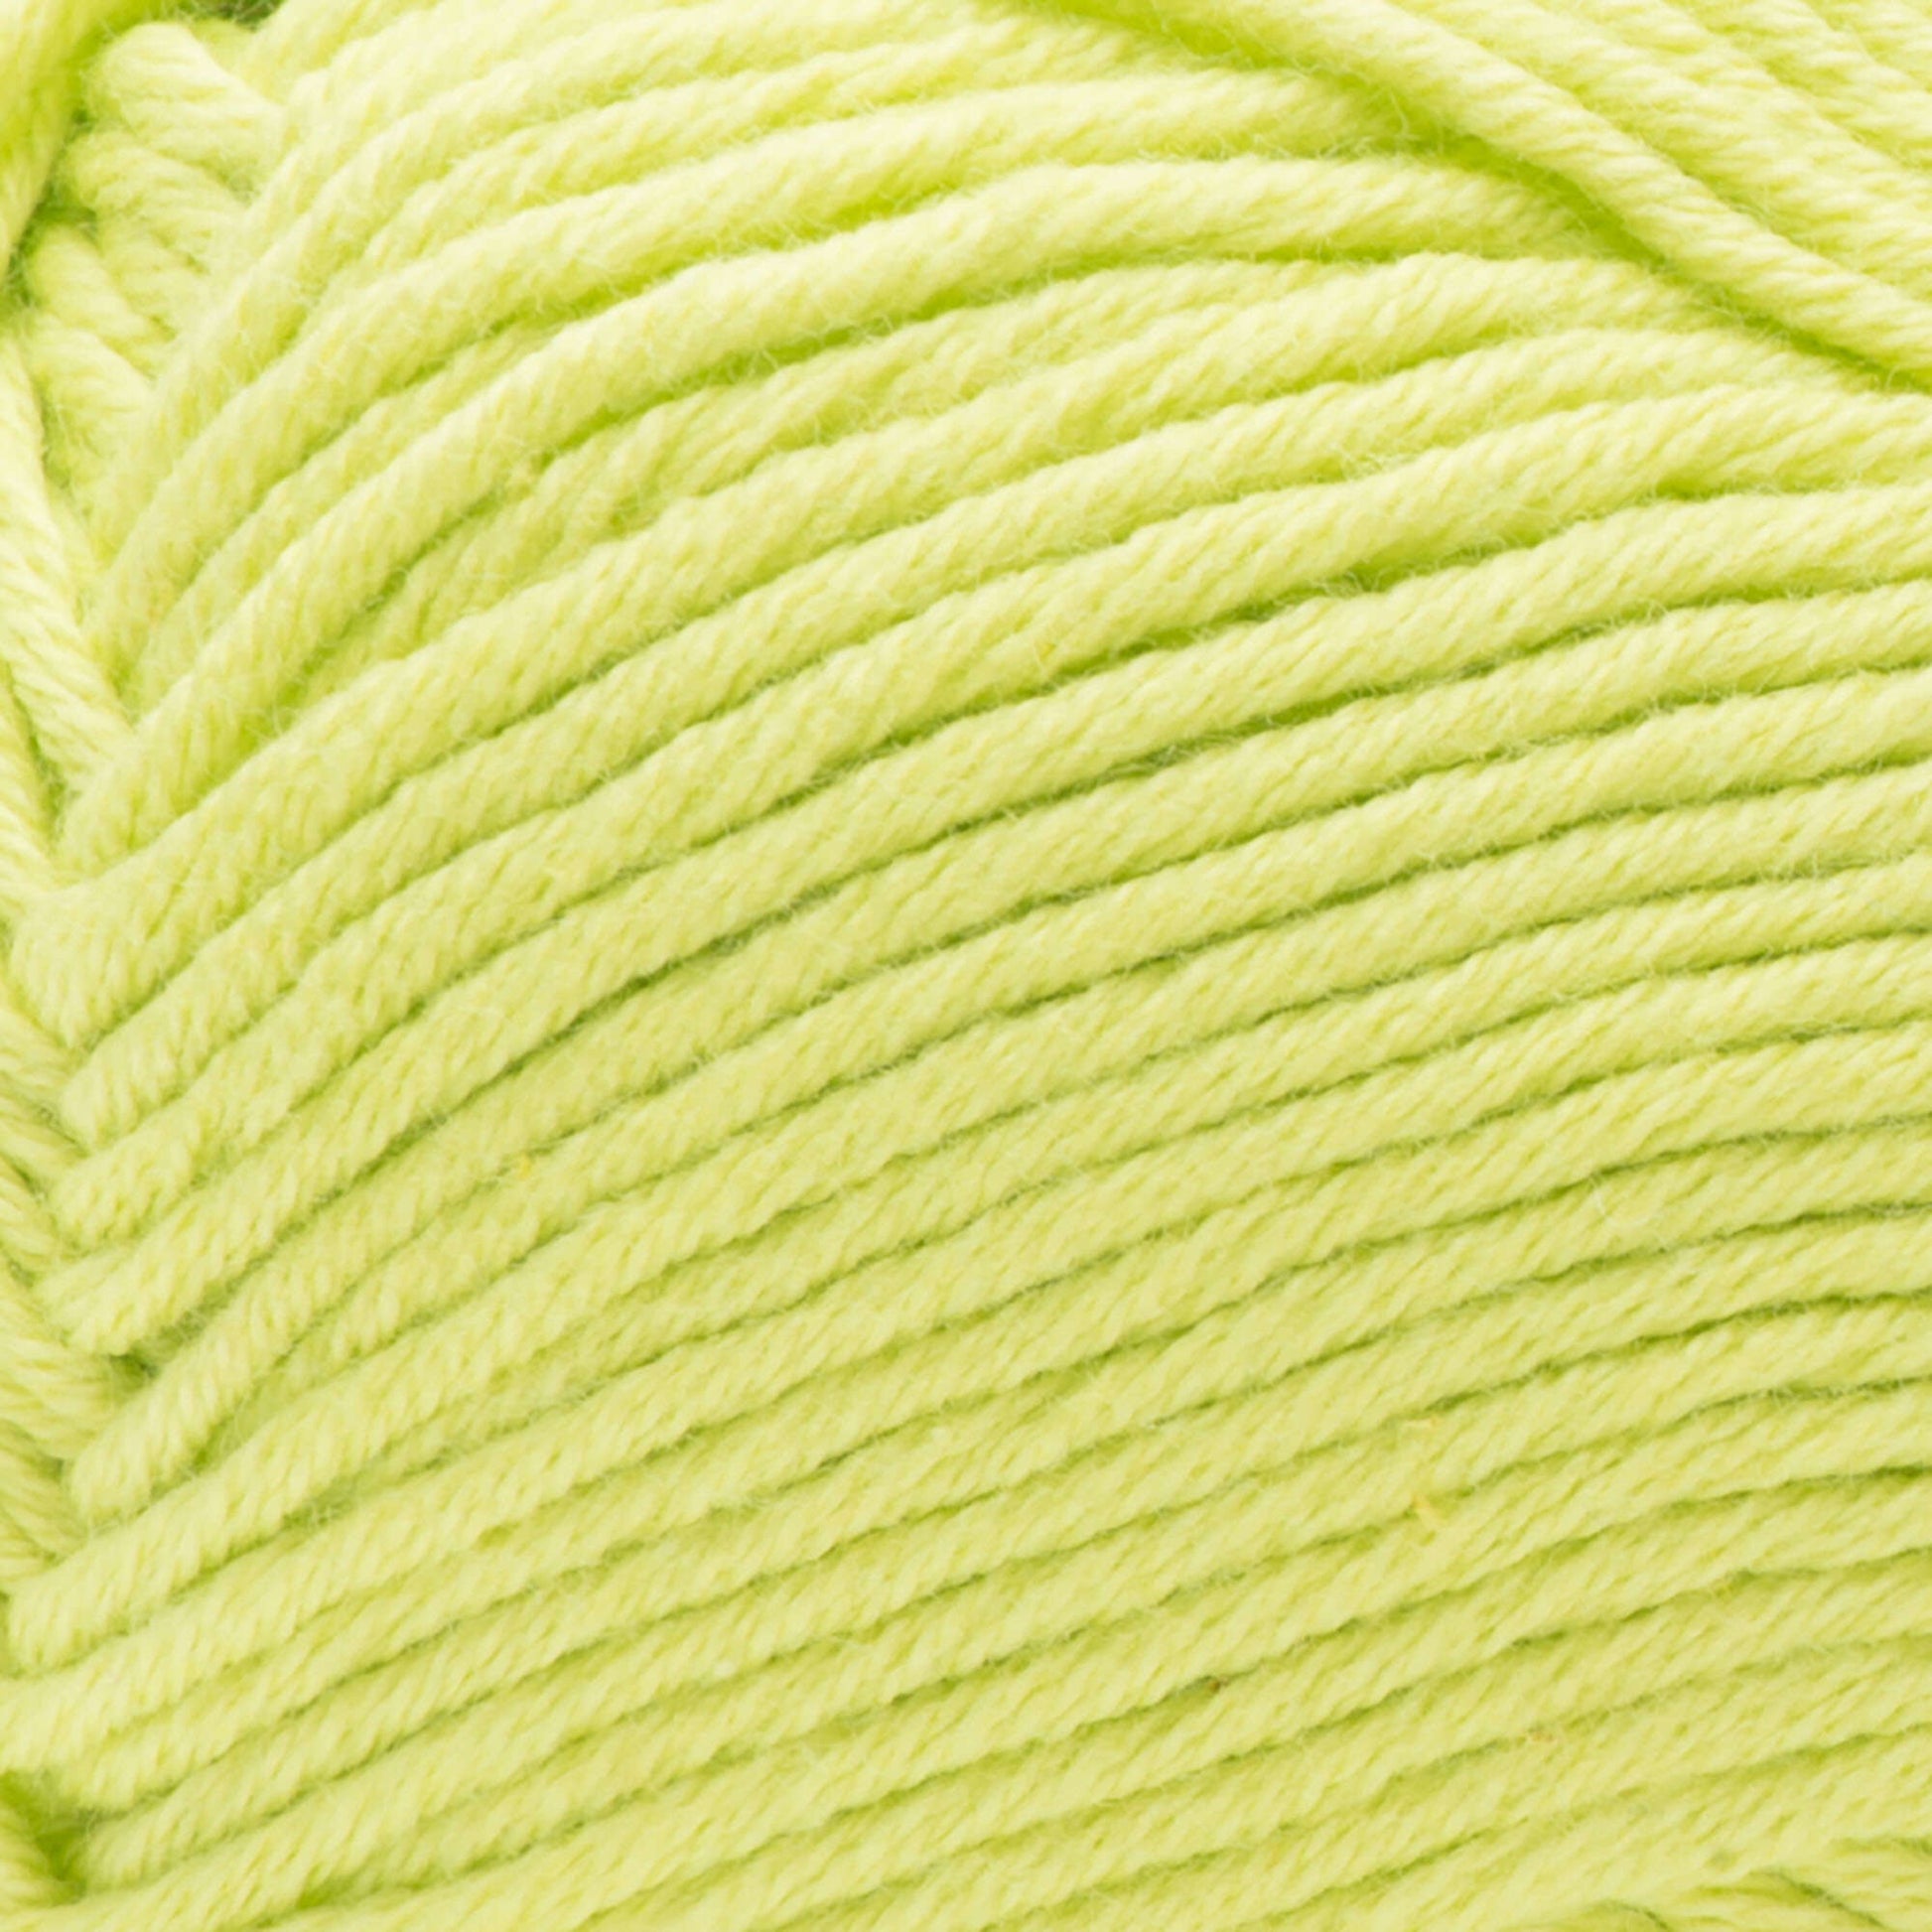 Bernat Softee Baby Cotton Yarn - Discontinued Shades